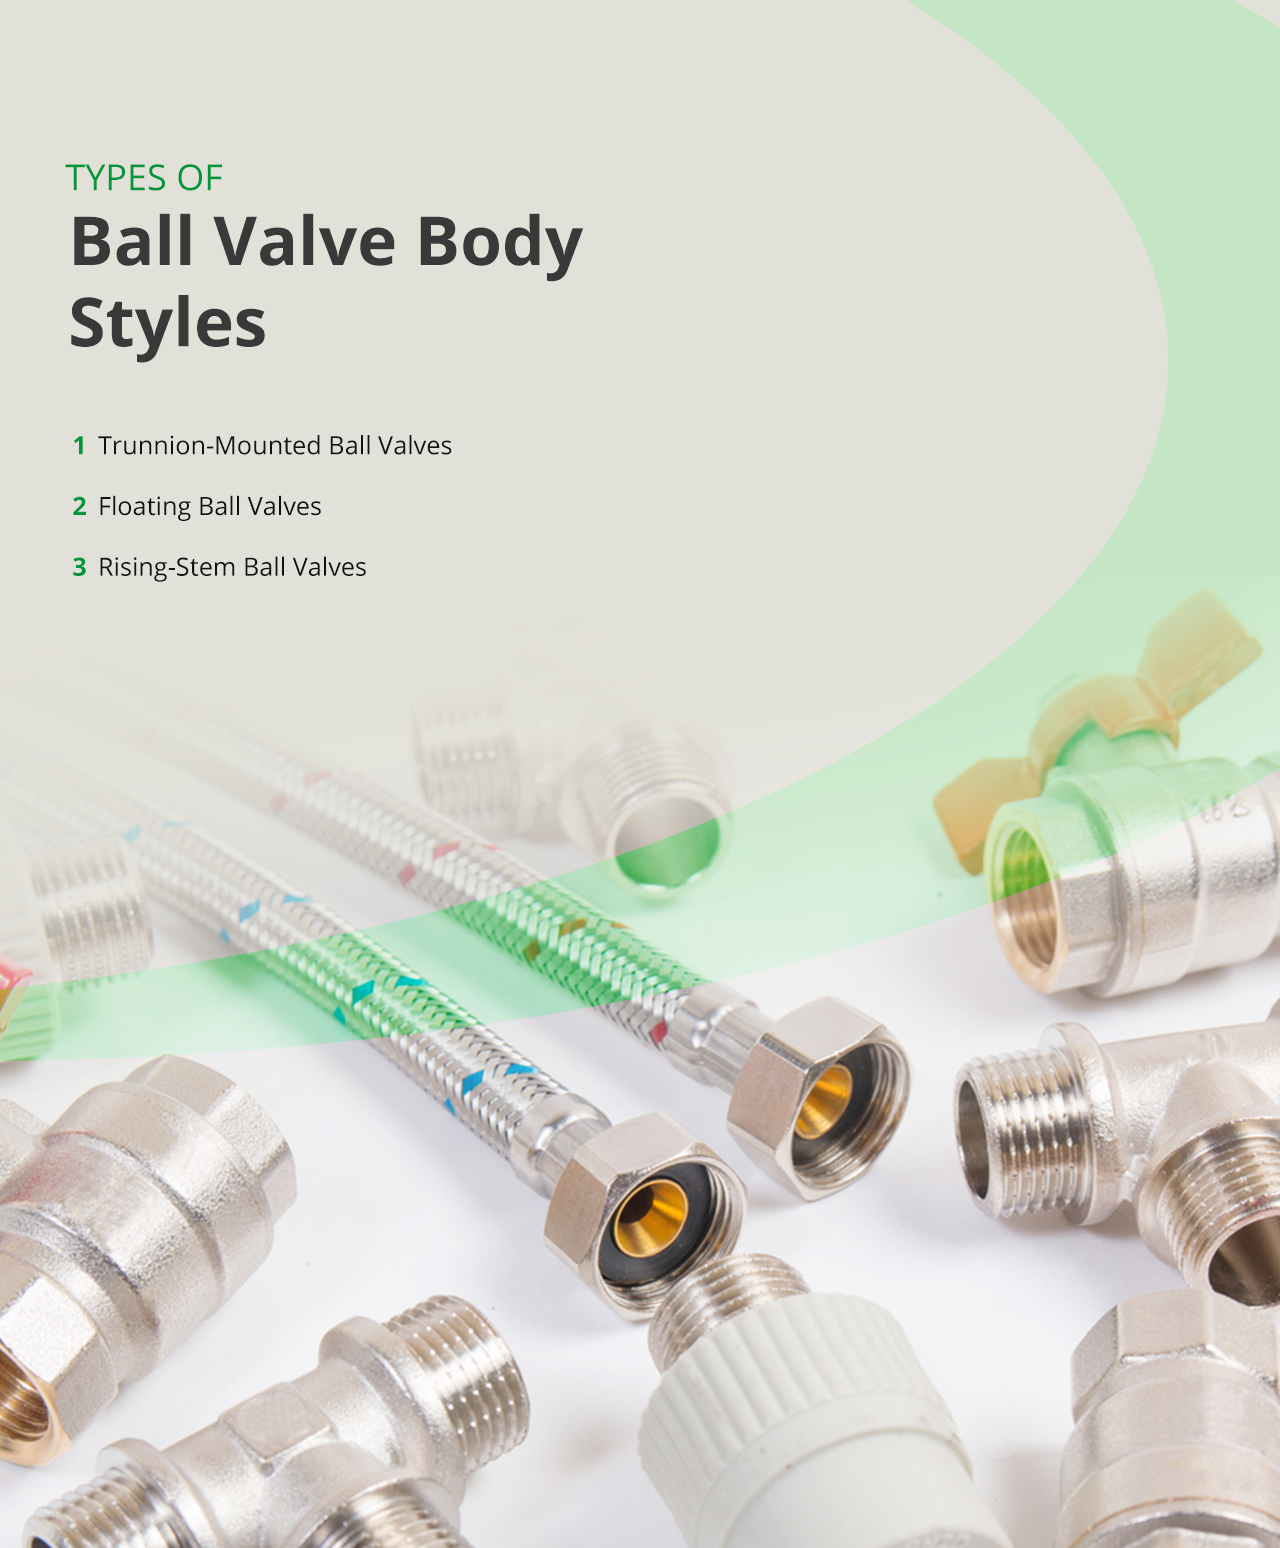 Types of Ball Valve Body Styles